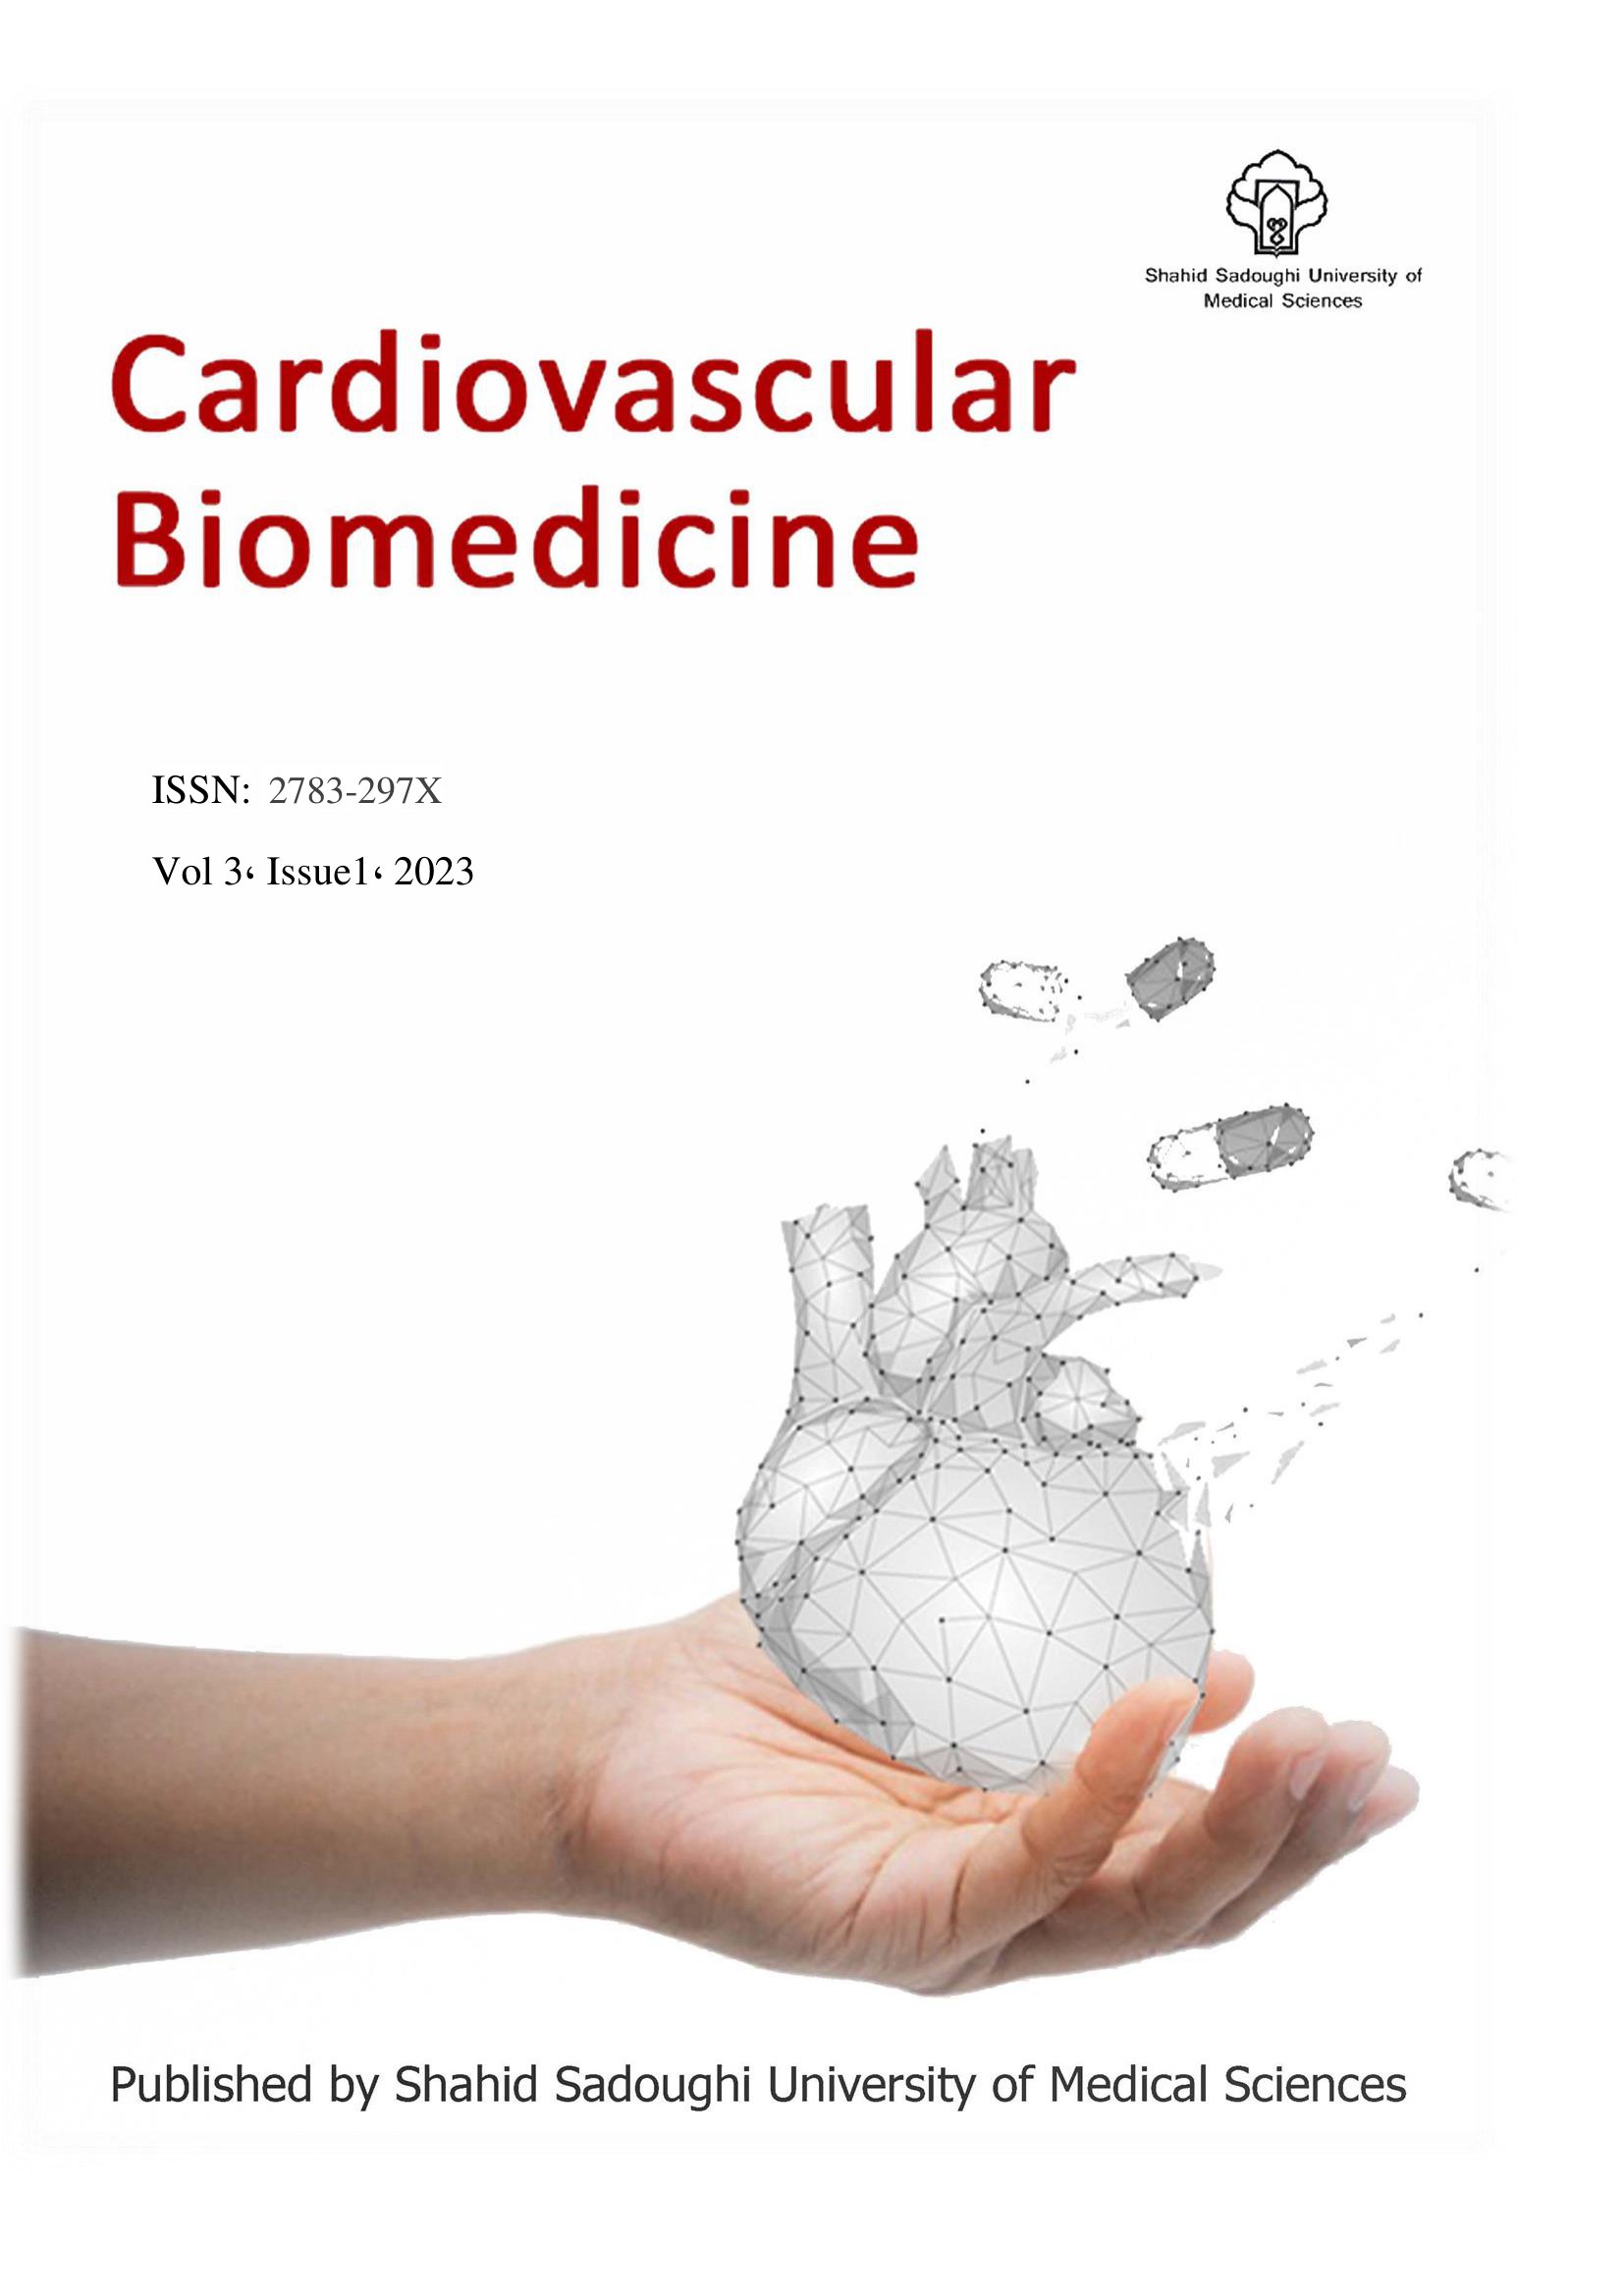 Cardiovascular Biomedicine